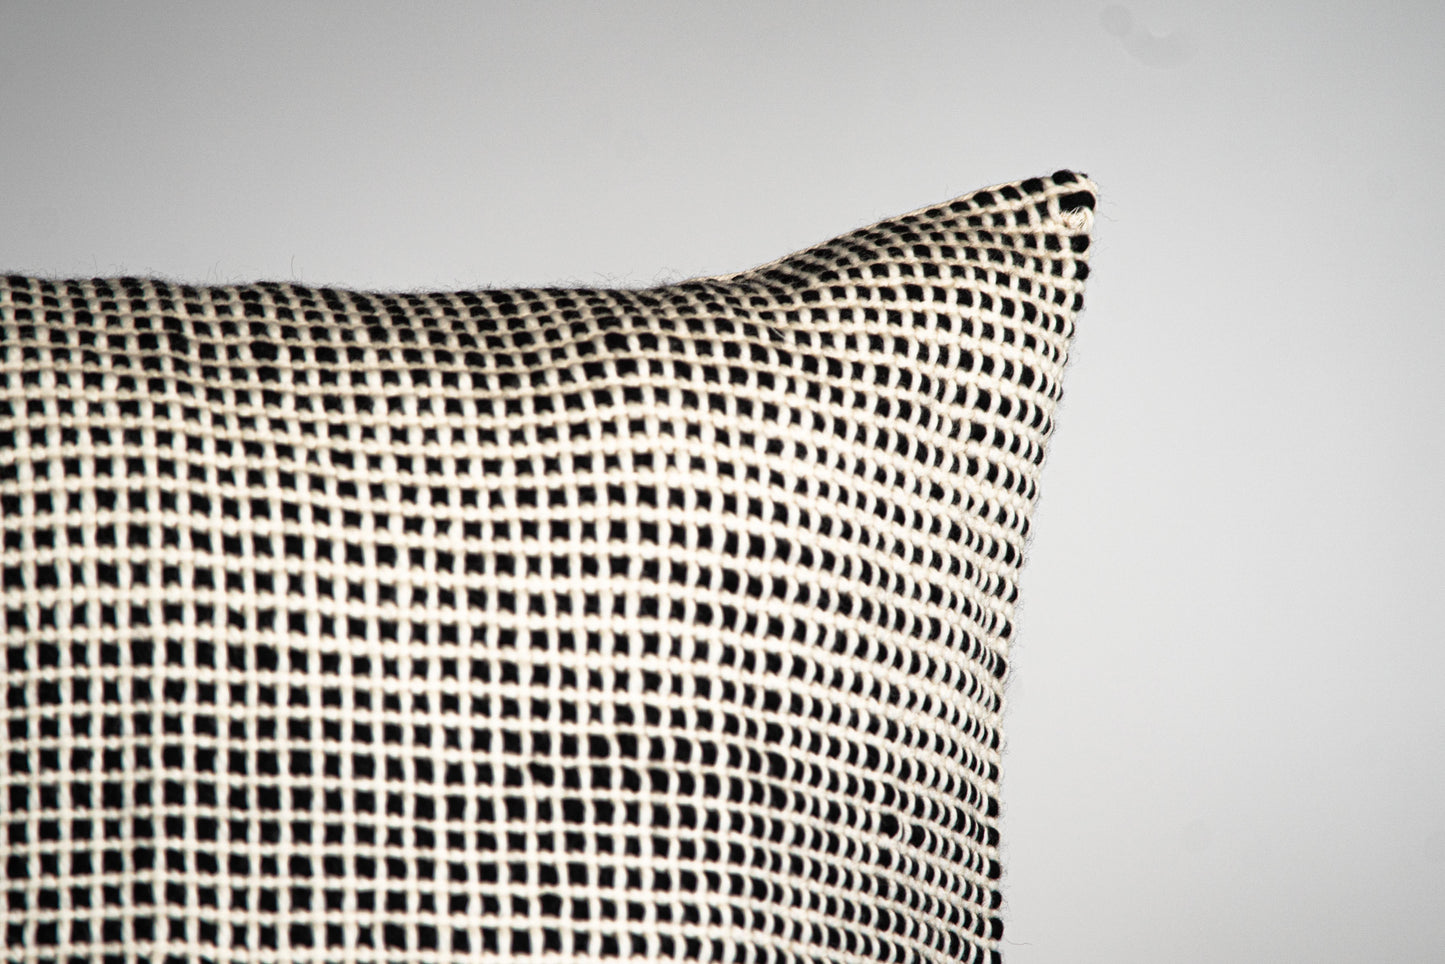 Grid Cushion Cover in Black 18x18